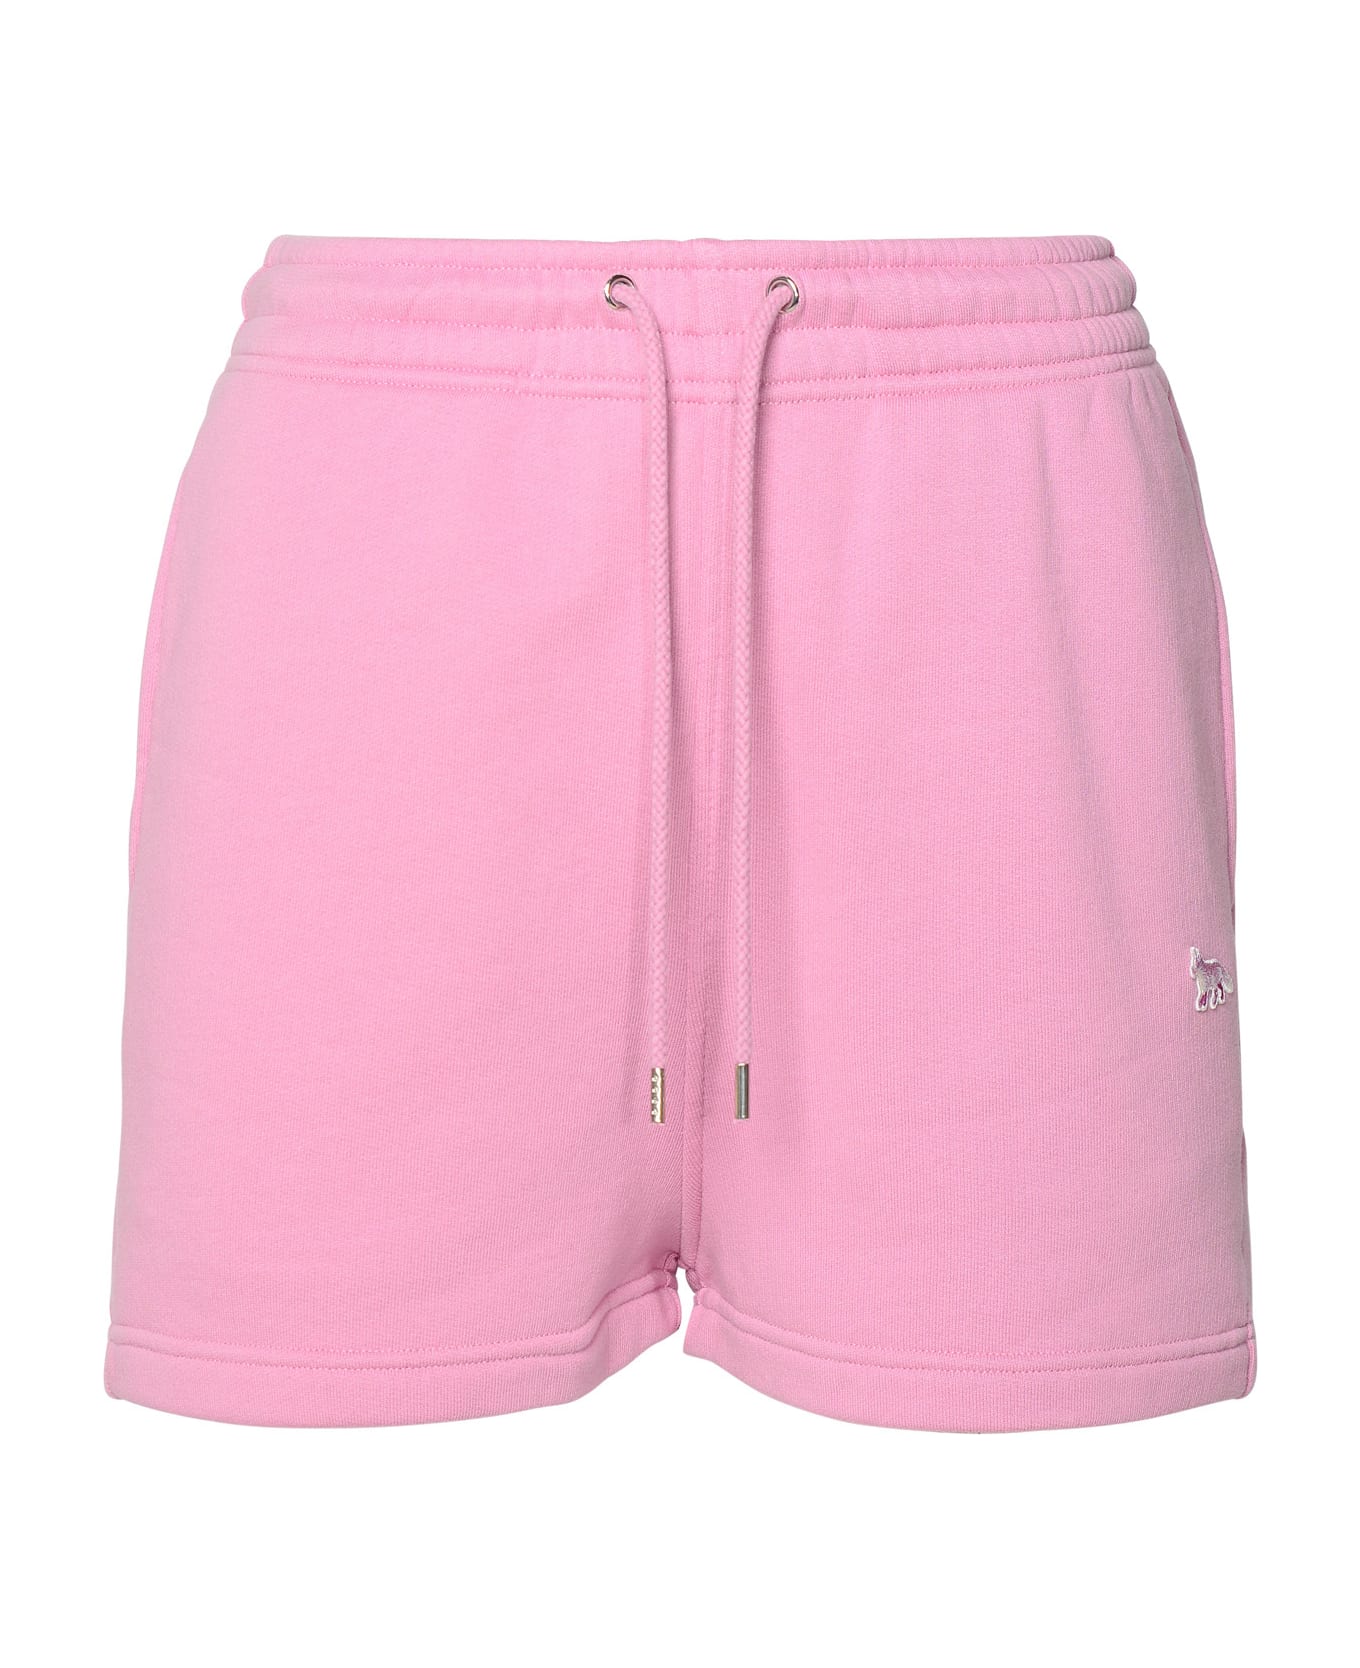 Maison Kitsuné Pink Cotton Shorts - Pink ショートパンツ